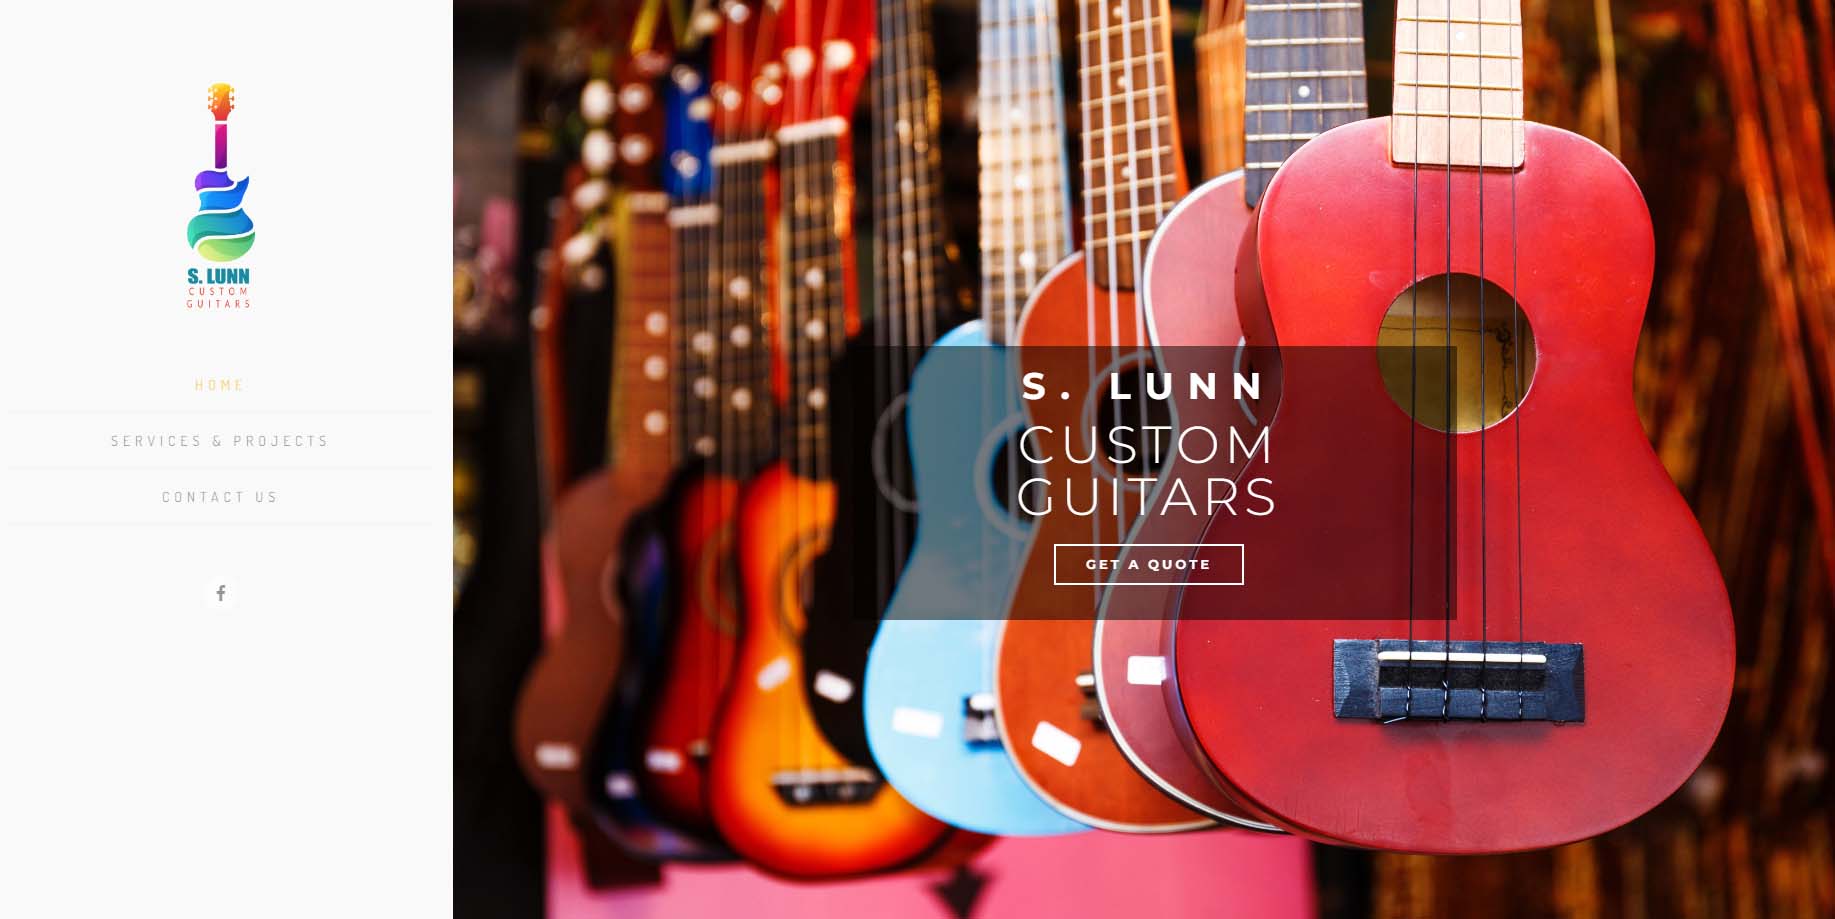 S Lunn Custom Guitars